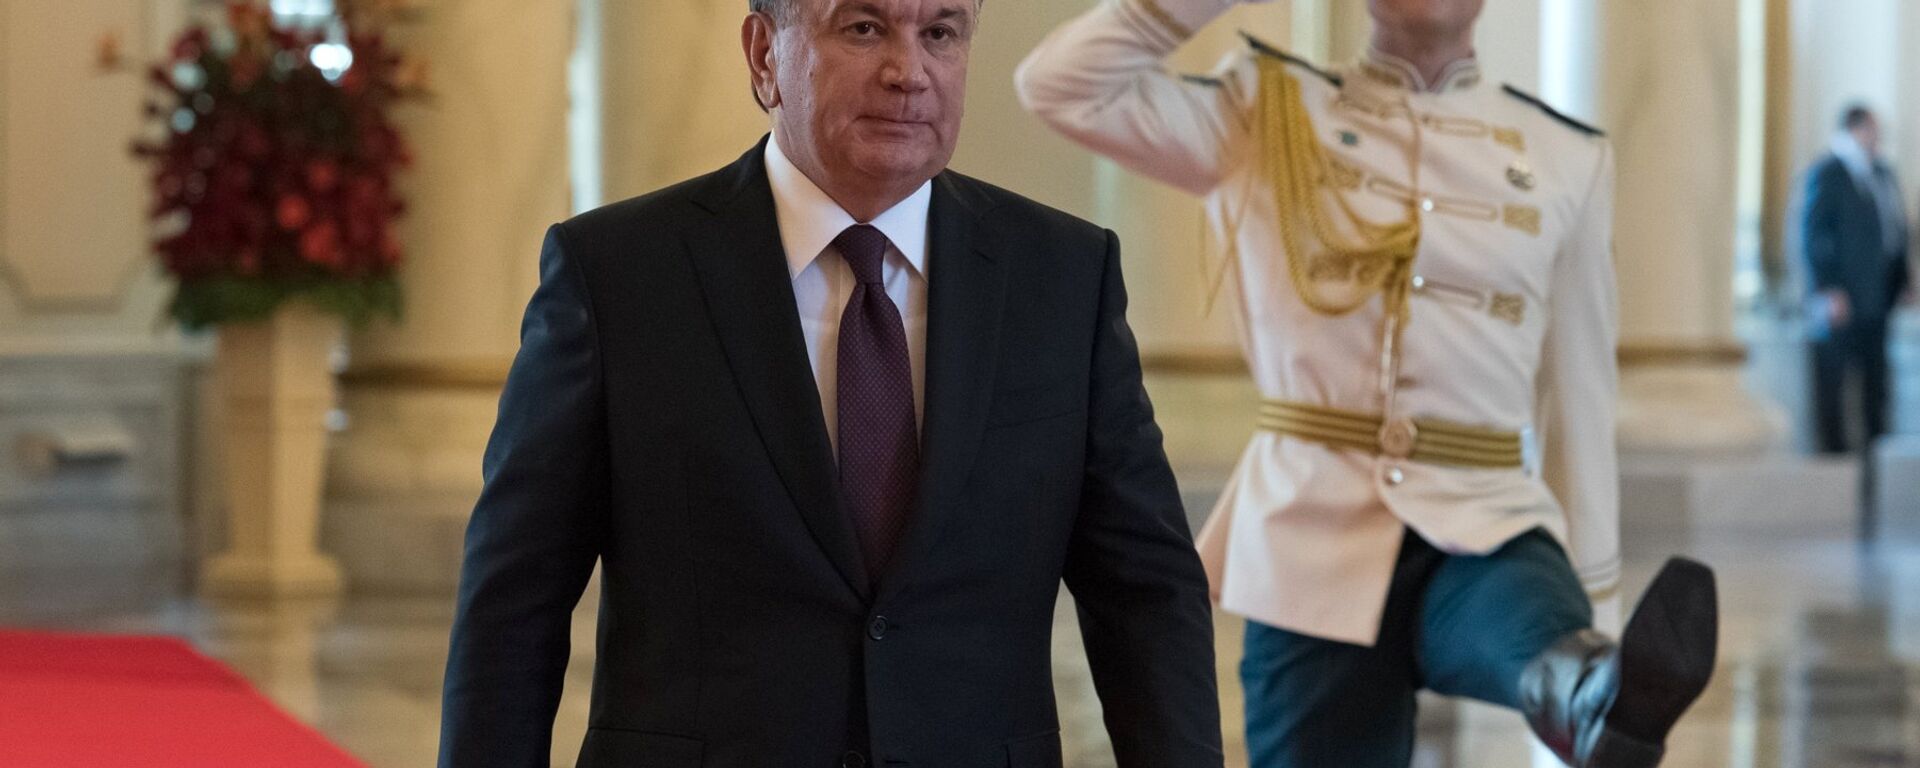 رئيس أوزبكستان شوكت ميرزييف - سبوتنيك عربي, 1920, 02.07.2022